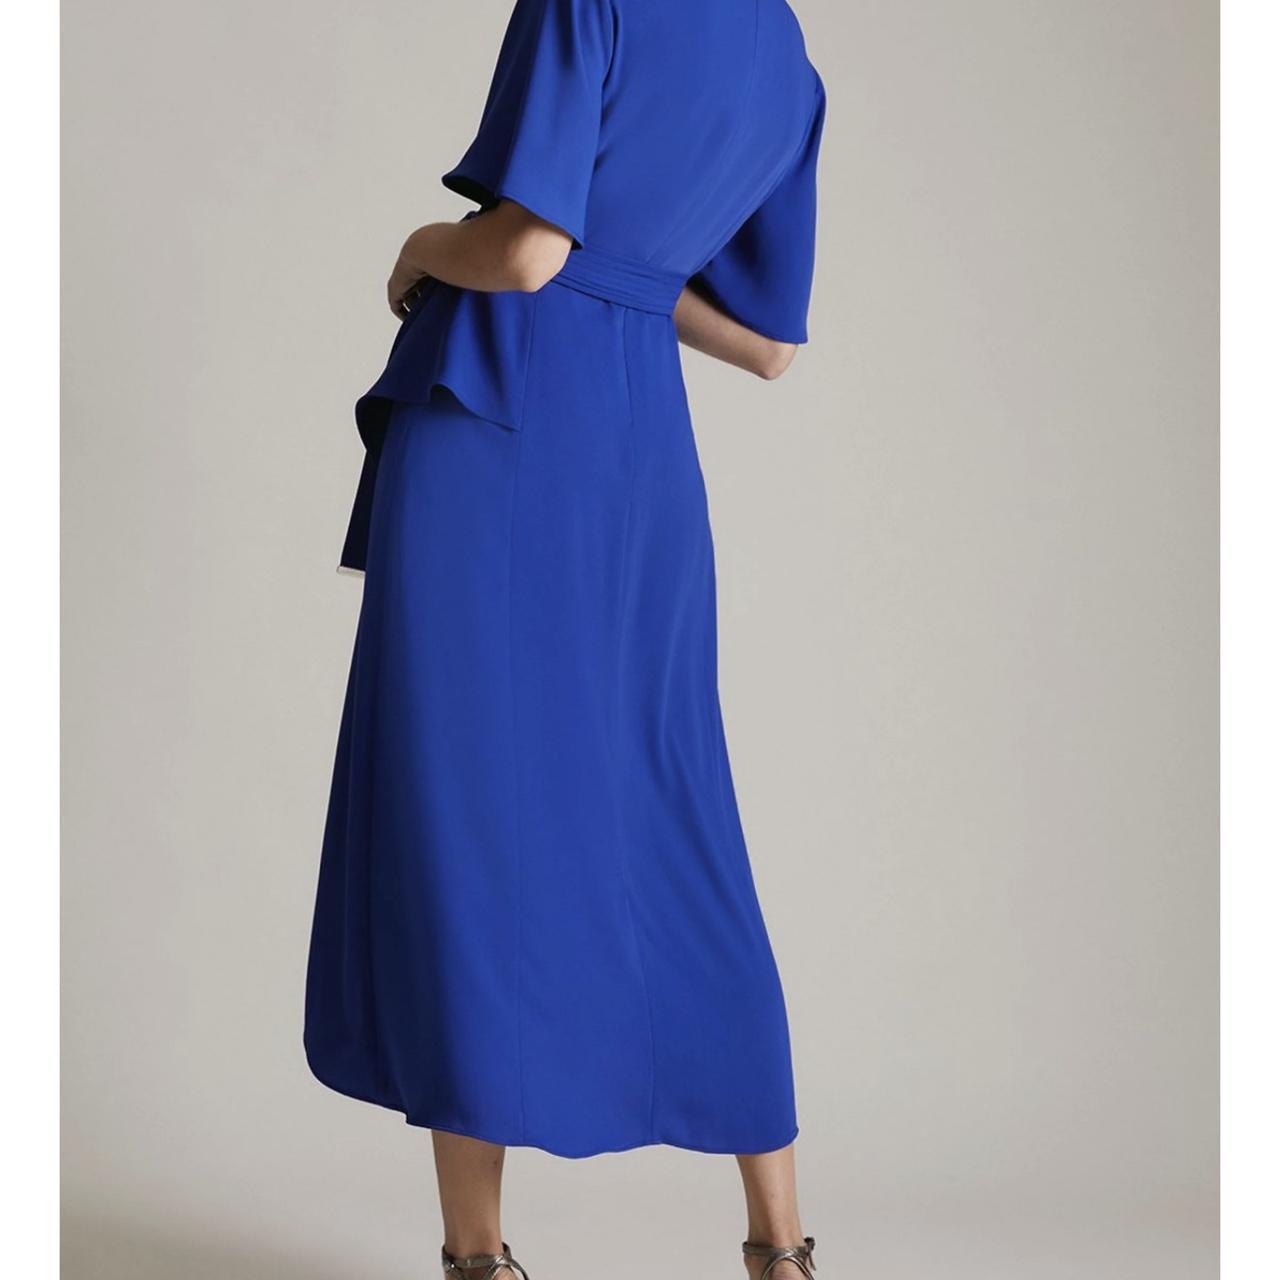 Tall Women's Clothing  Karen Millen Australia